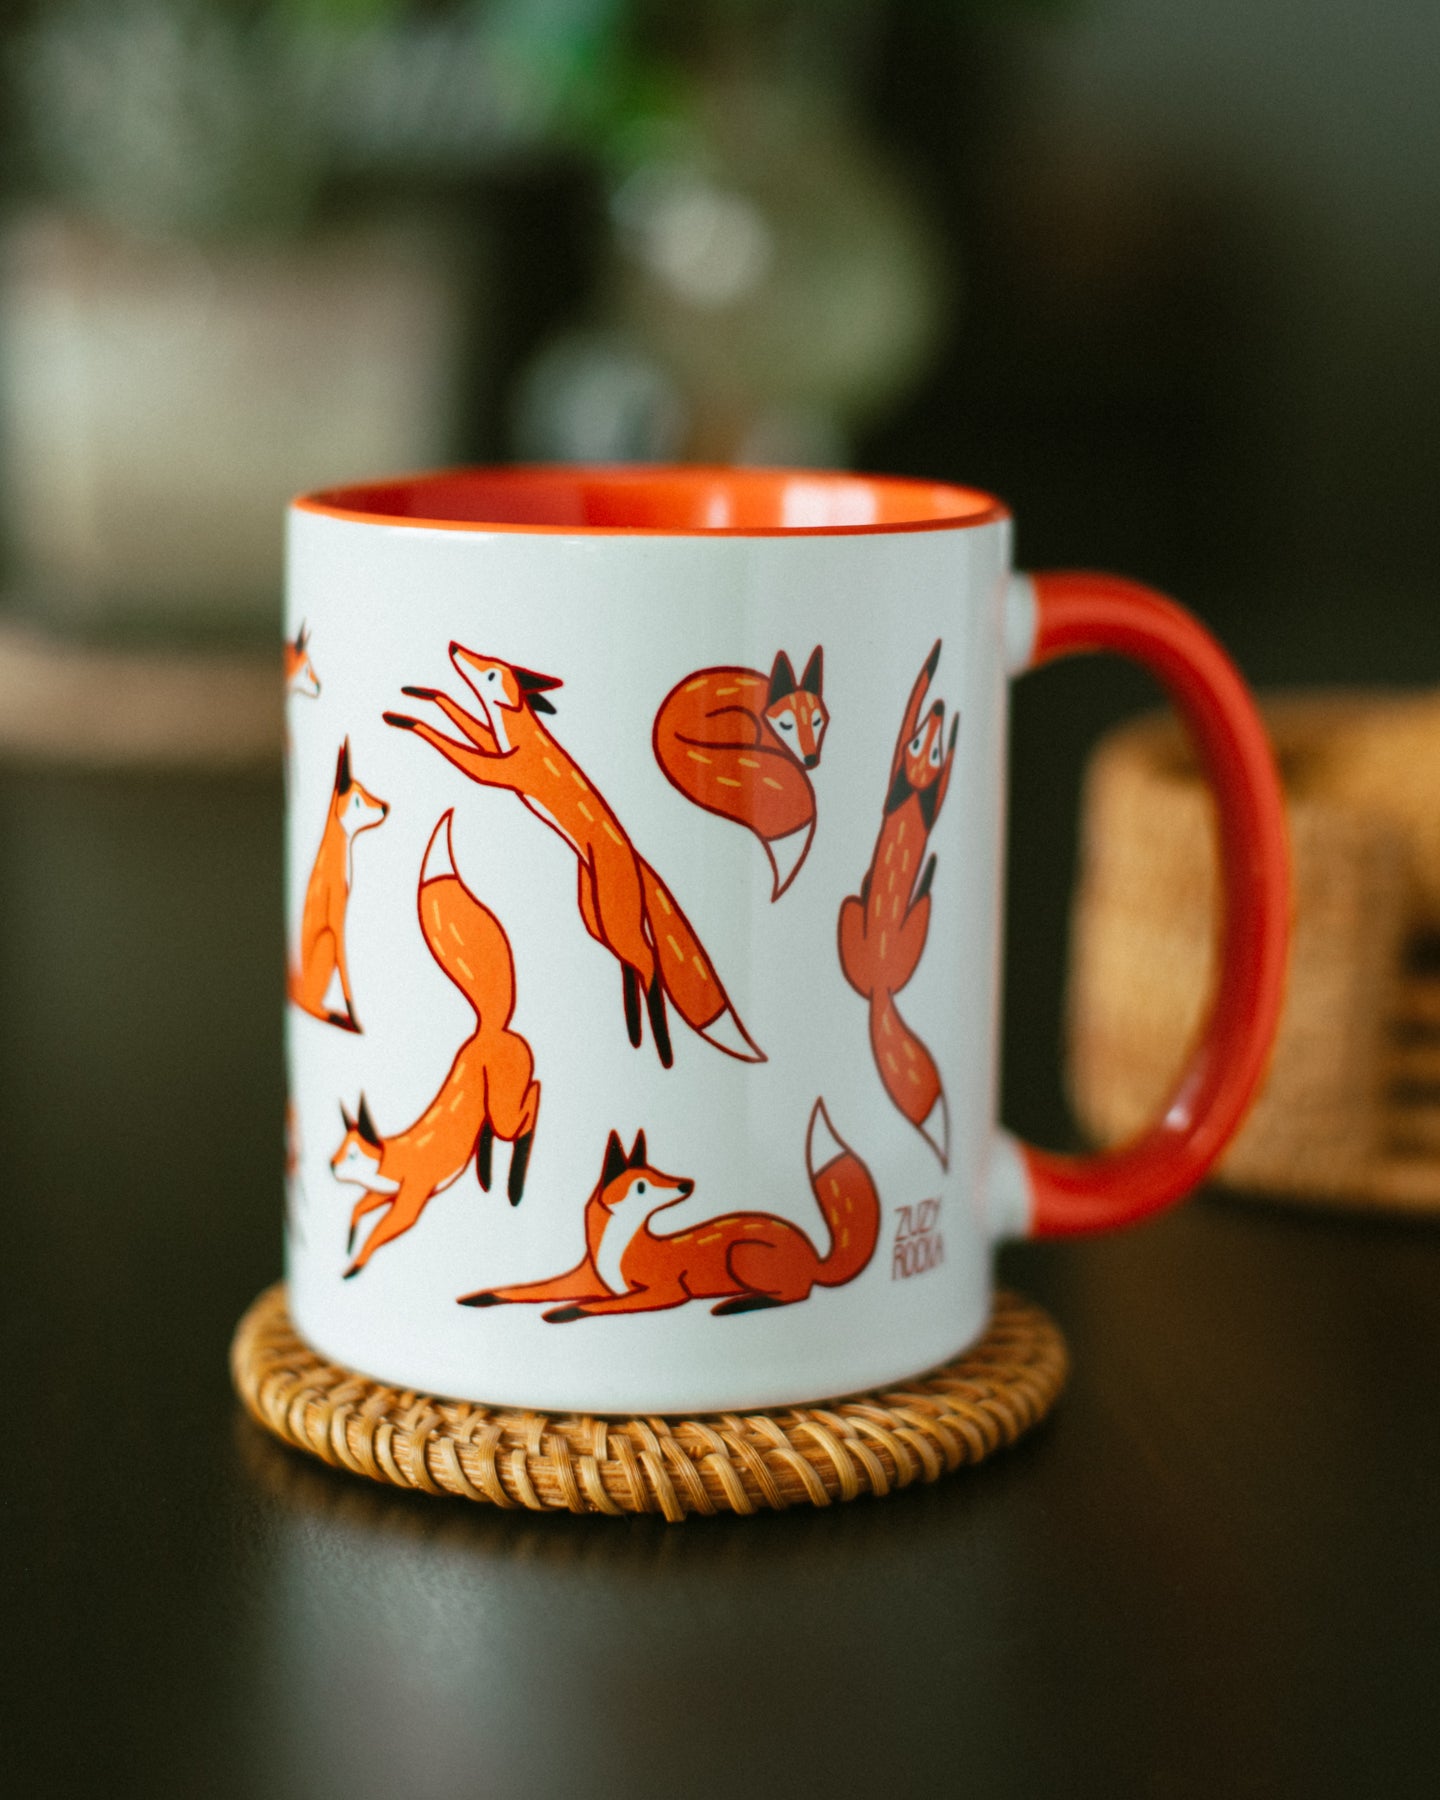 Foxes a Plenty Mug - in studio